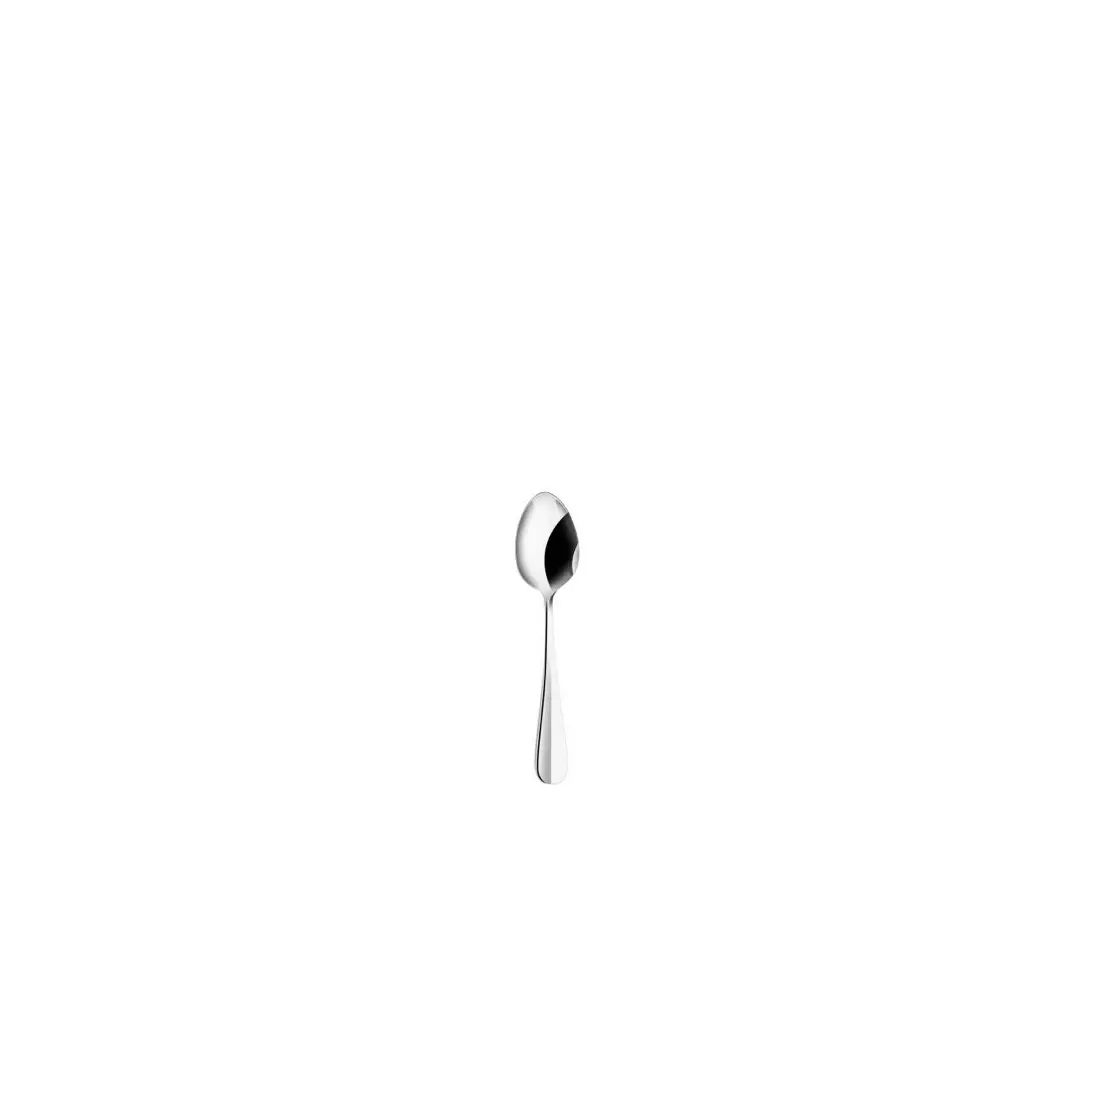 KULIG CAPRI coffee spoon, silver